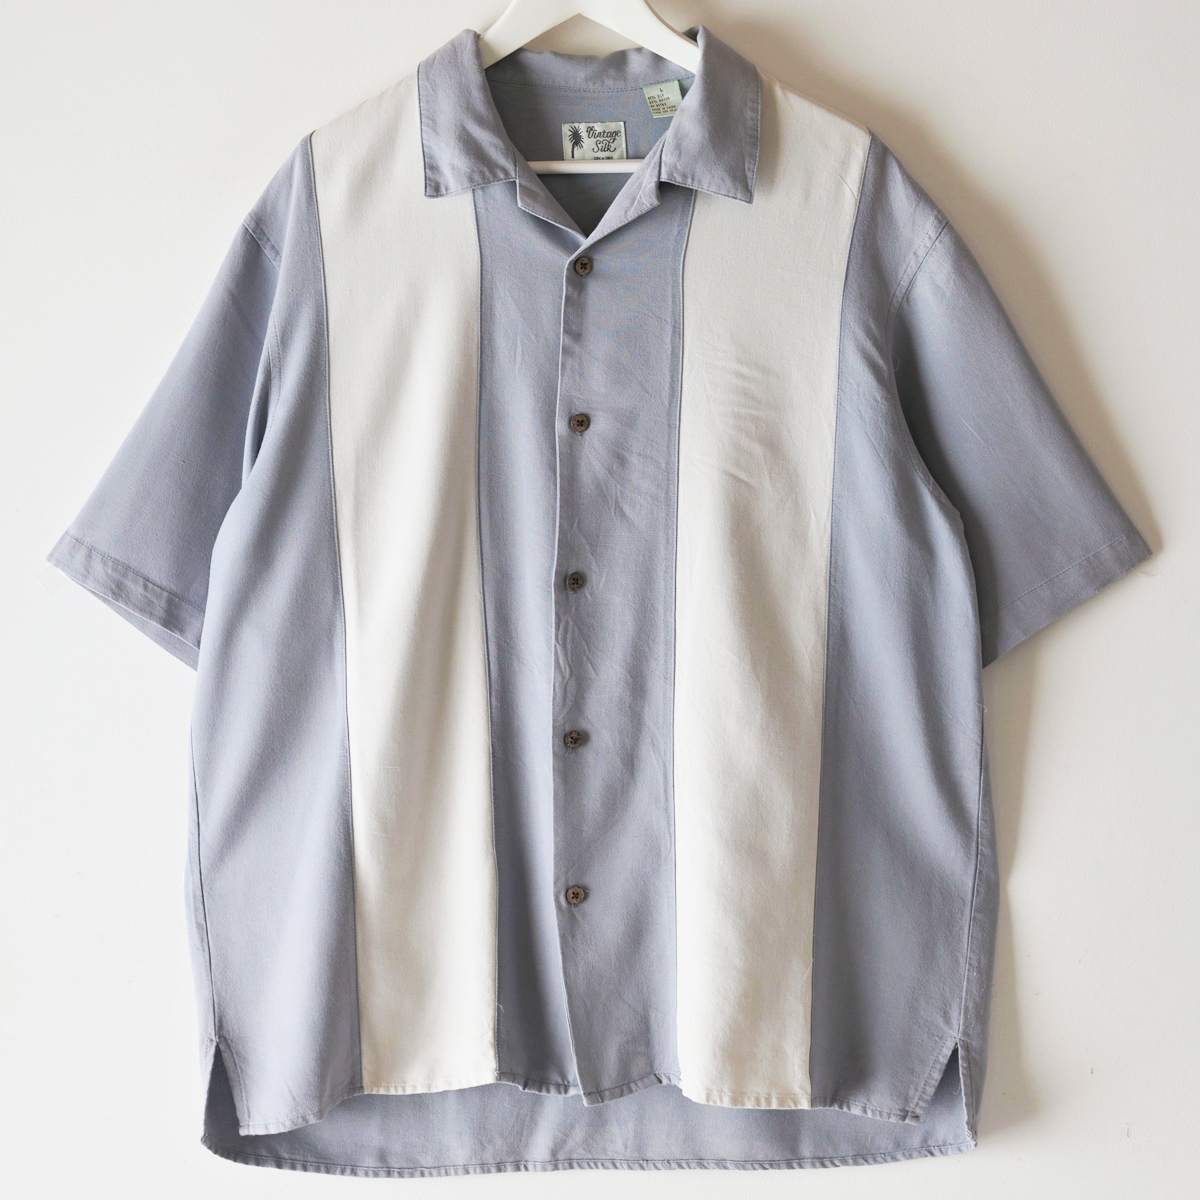 90s Vintage Silk オープンカラー 半袖 シルク シャツ バイカラー L / ヴィンテージ 50s 60s 復刻 アロハシャツ ボーリングシャツ